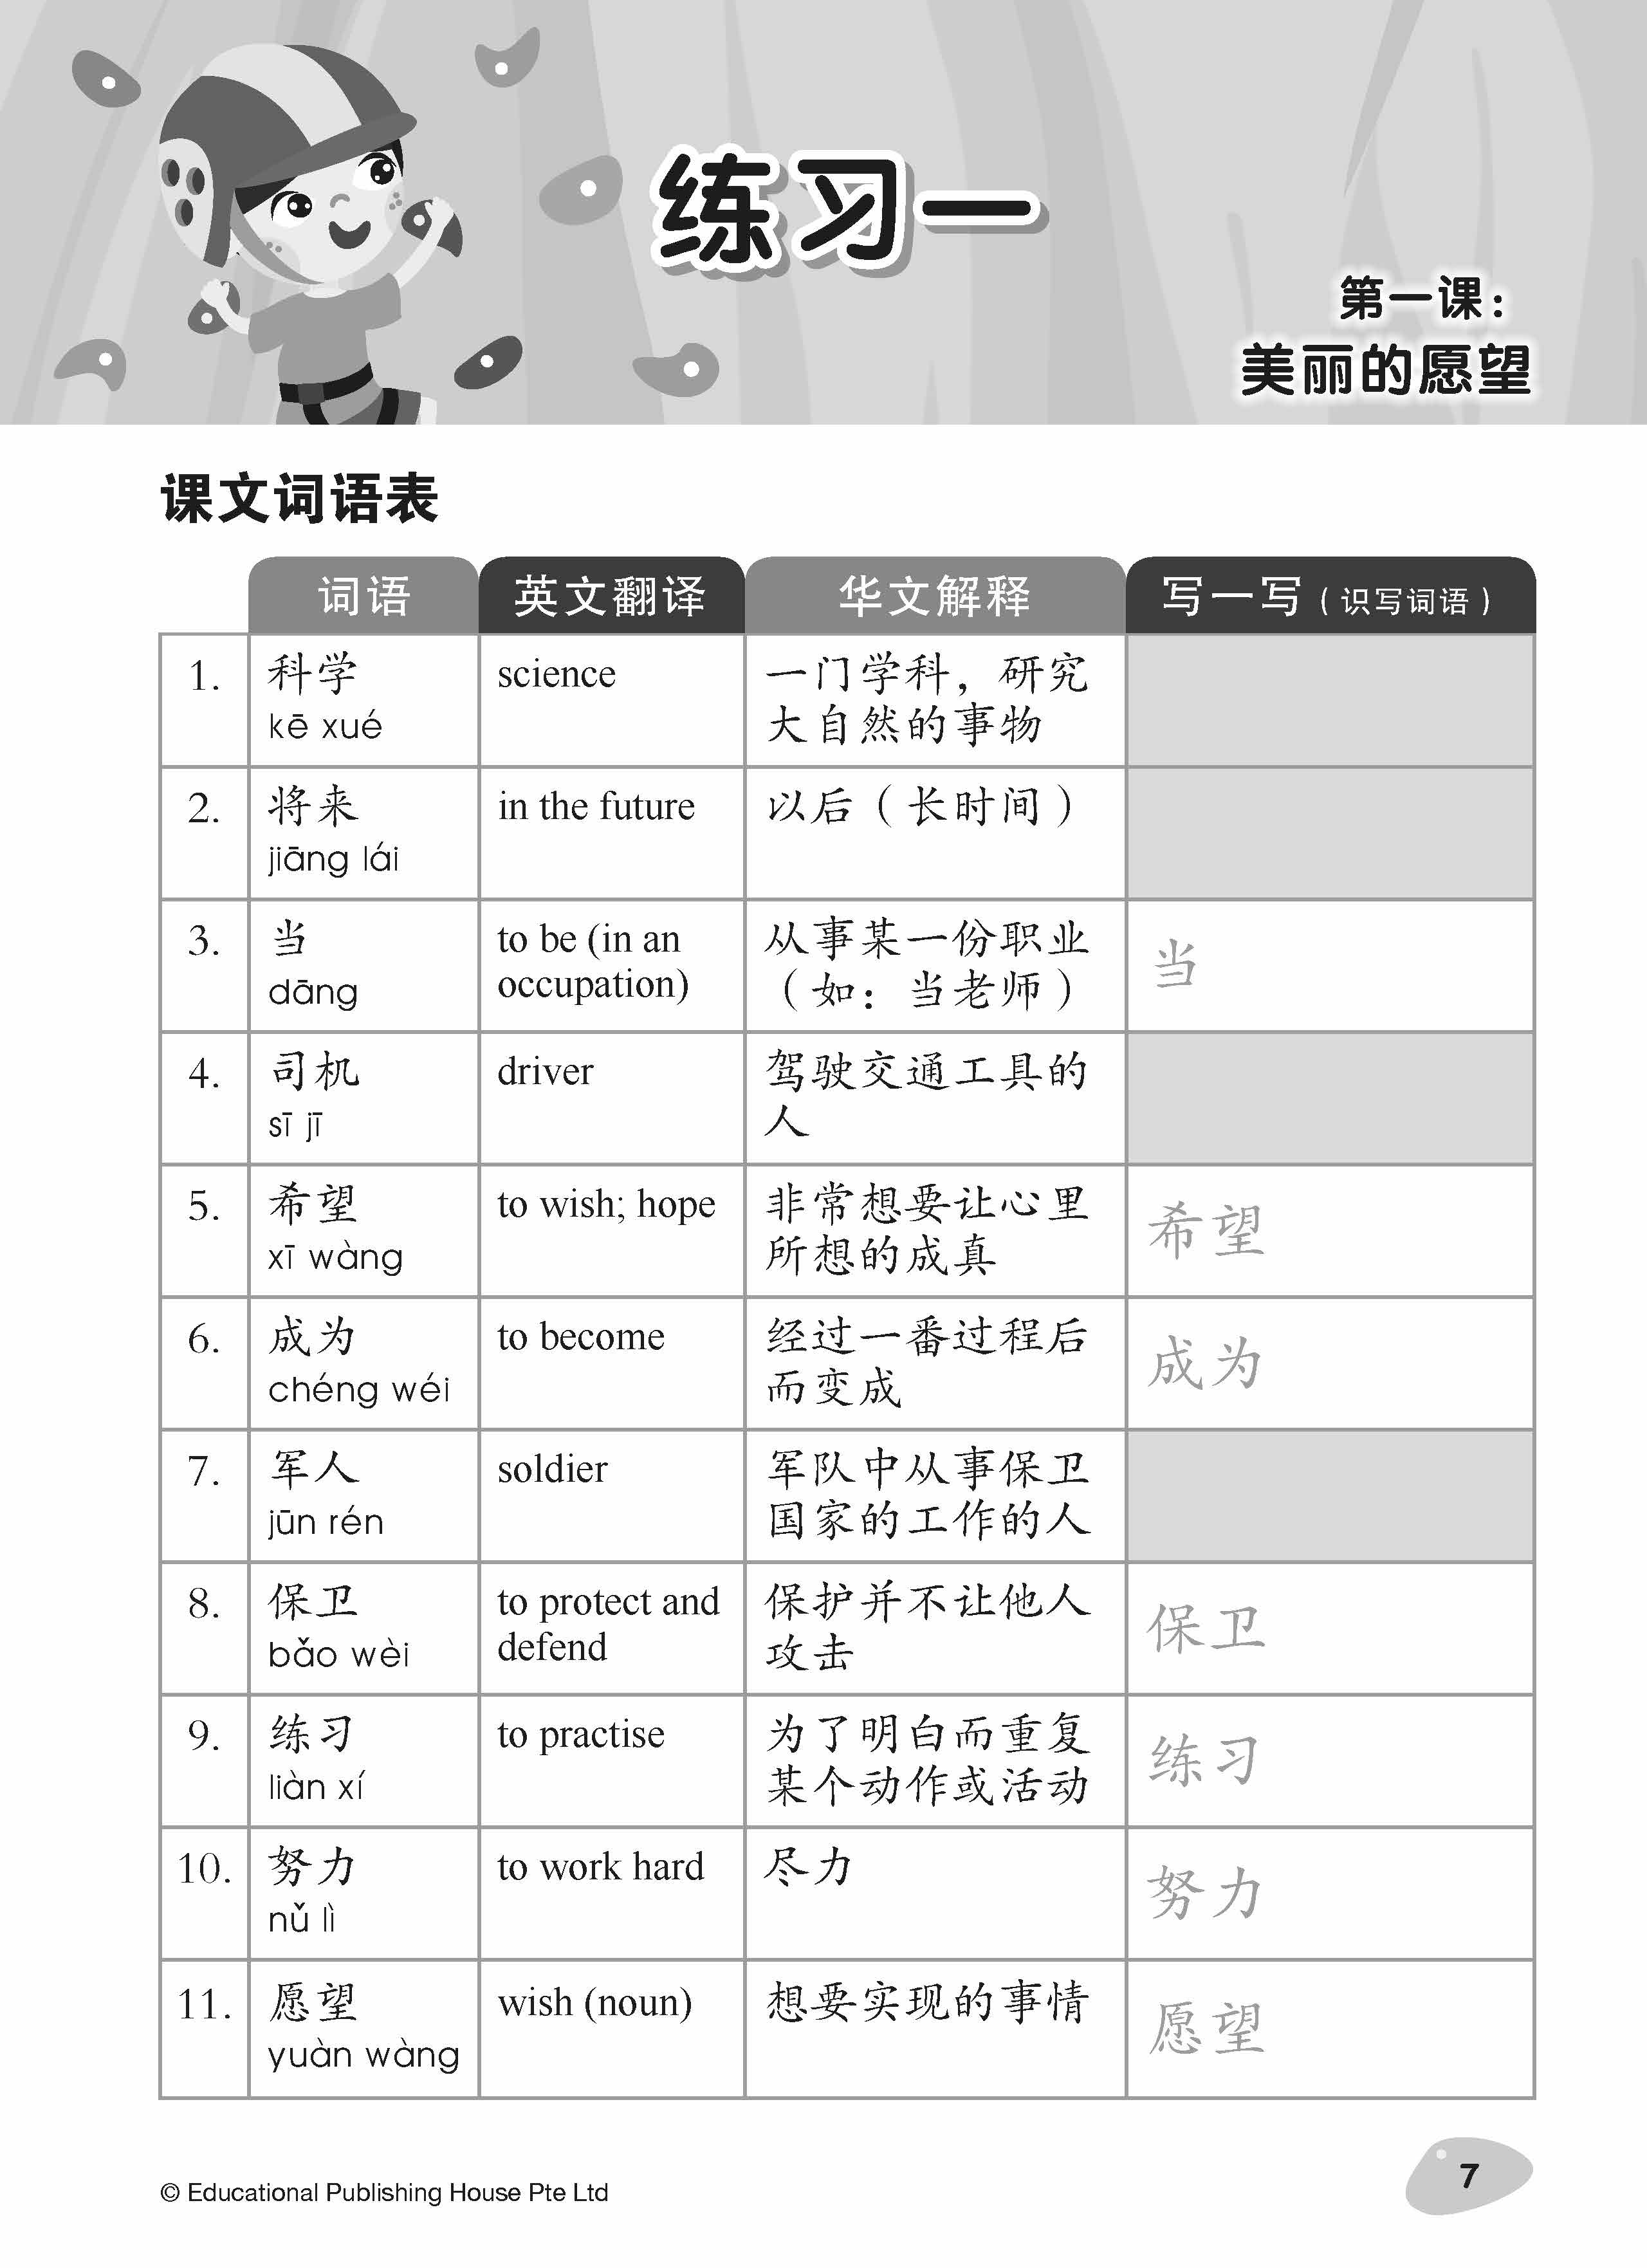 Primary 3 Tackling Higher Chinese Language Usage 专攻高级华文语文应用